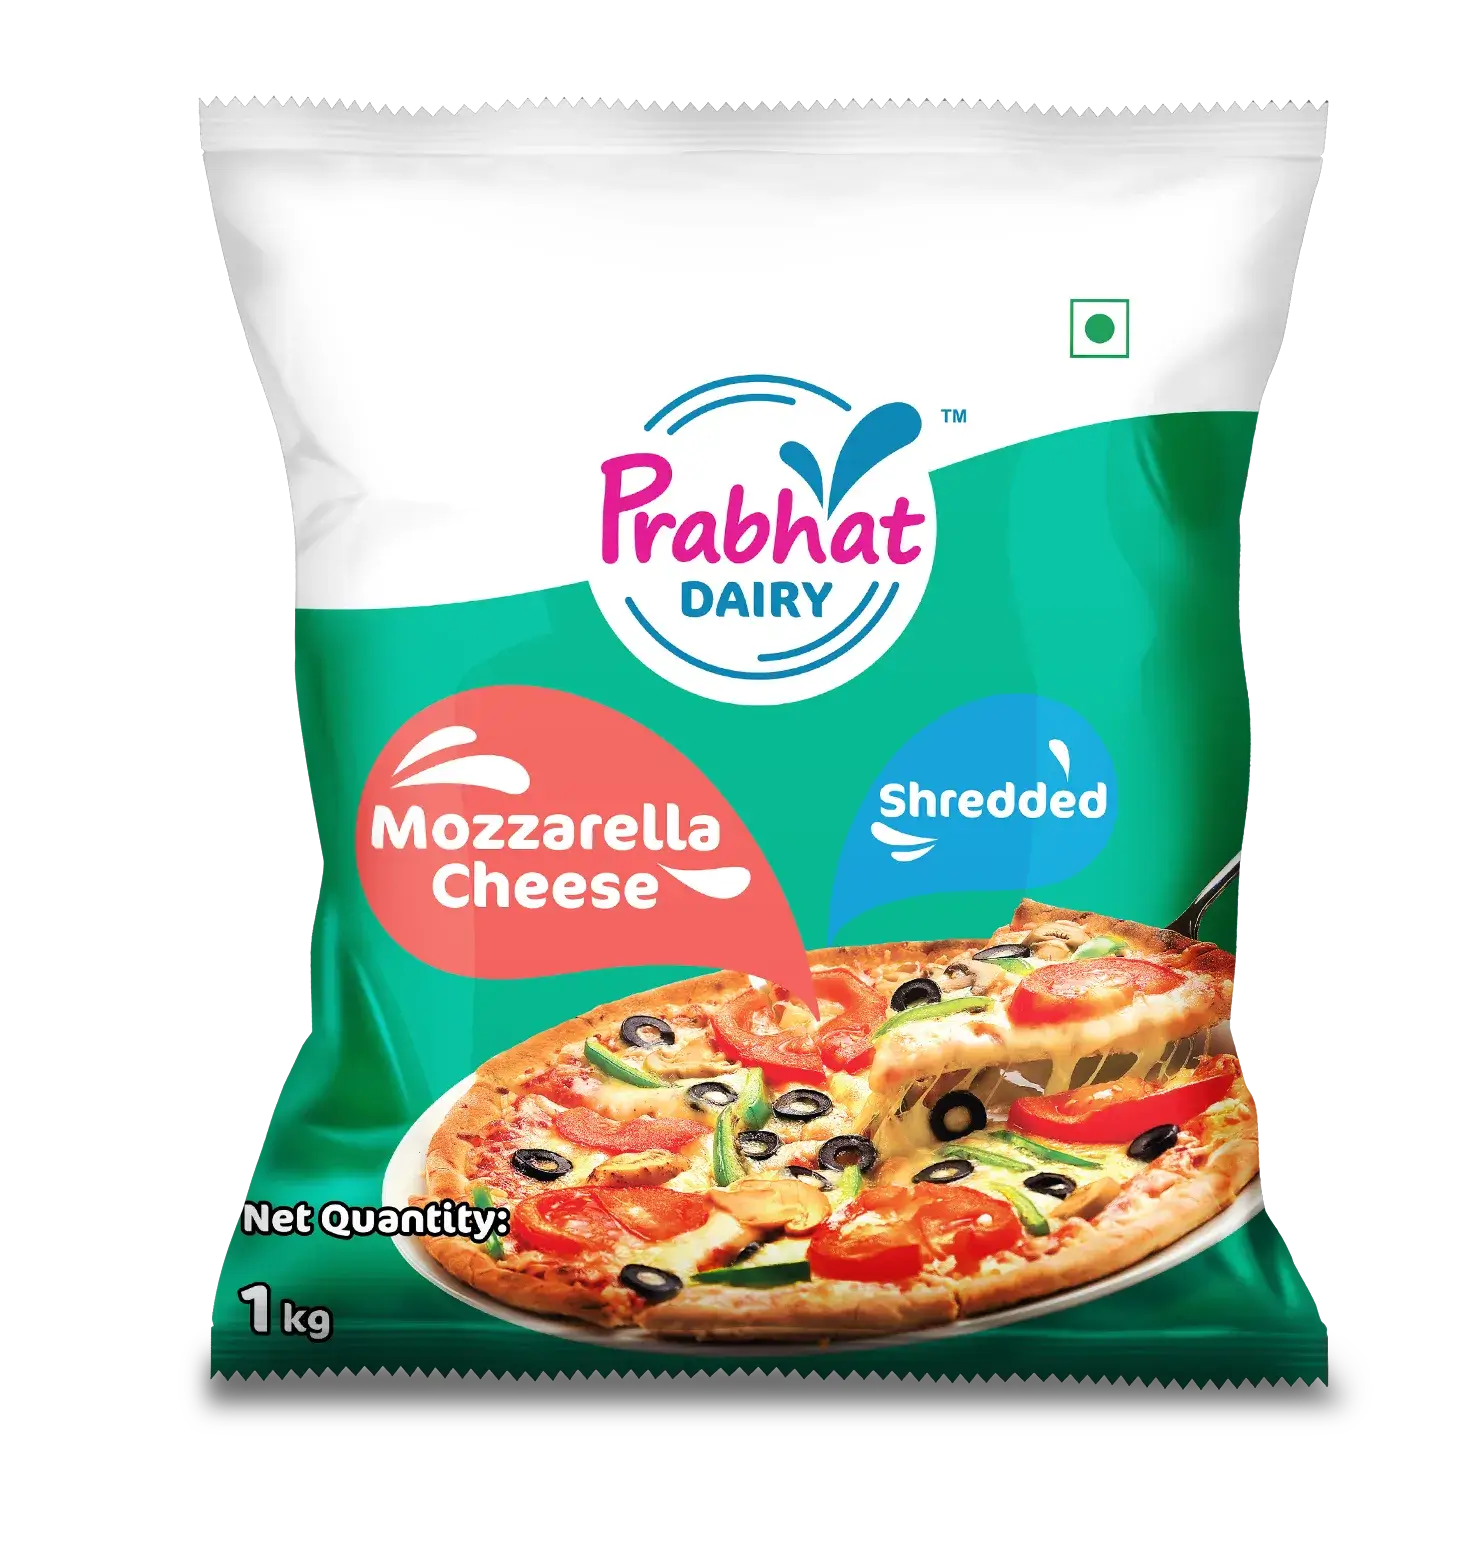 Prabhat Dairy Cheese Mozzarella Shredded Pouch 1kg